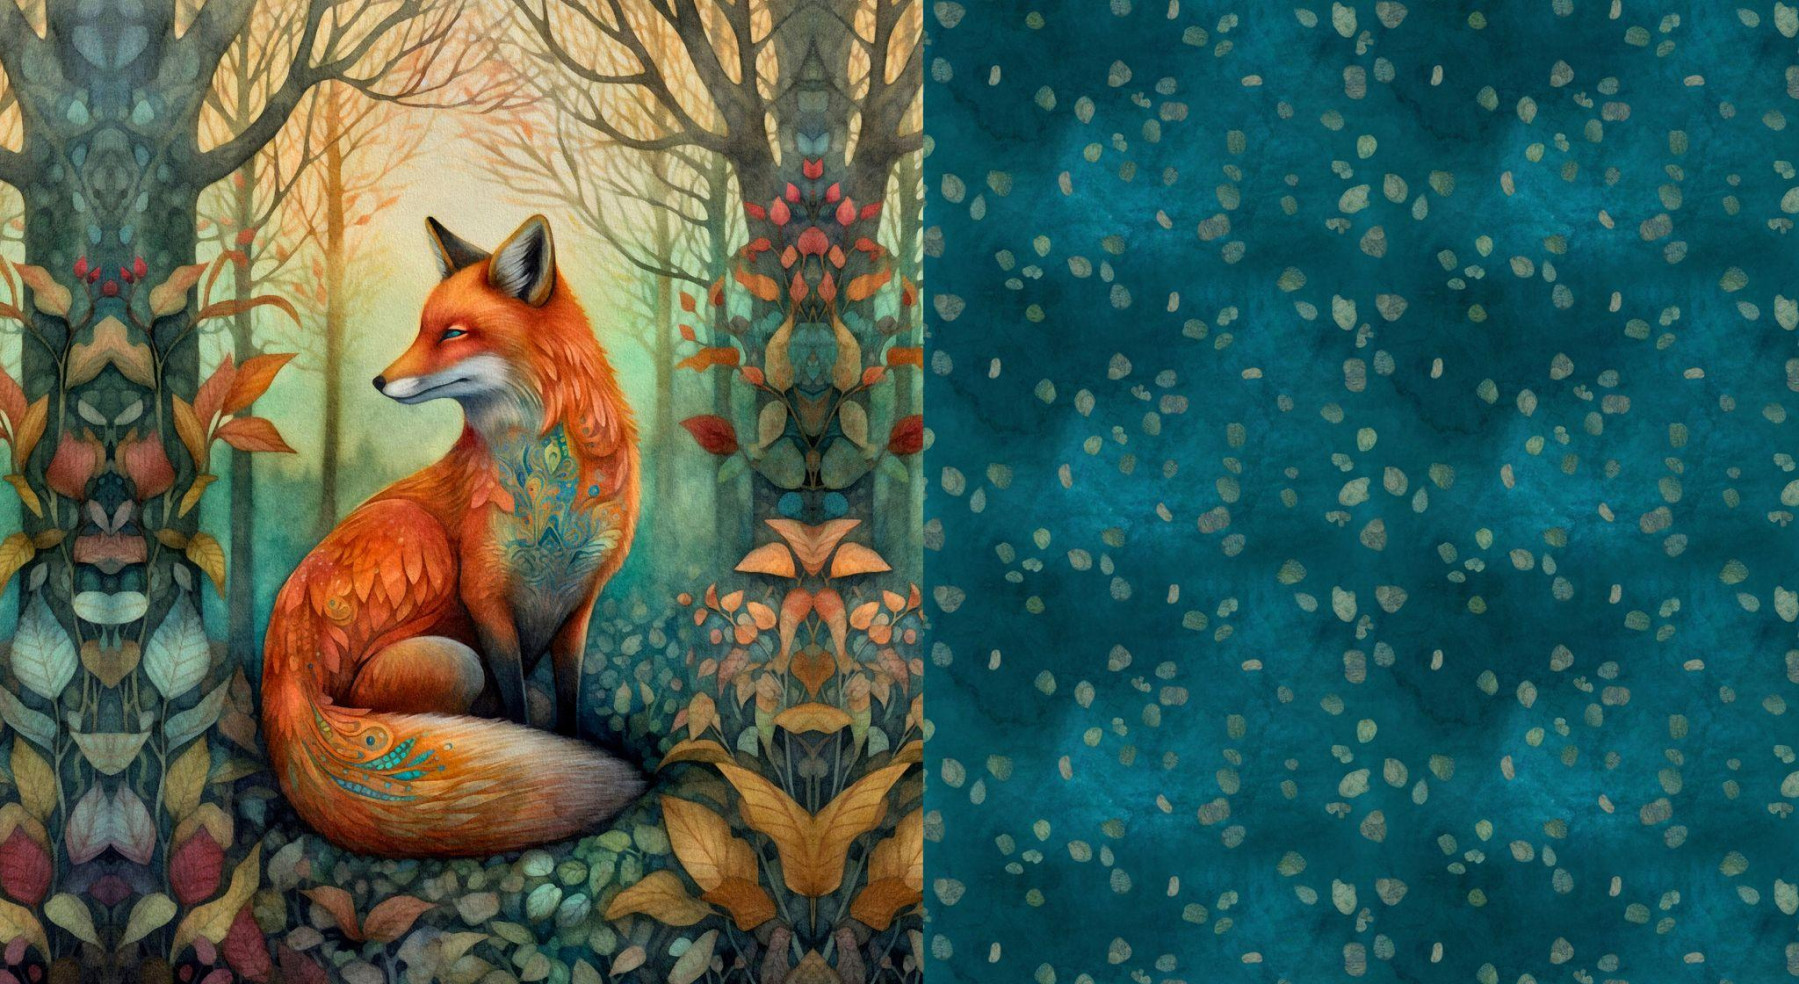 BOHO FOX - panel (75cm x 80cm) tkanina bawełniana